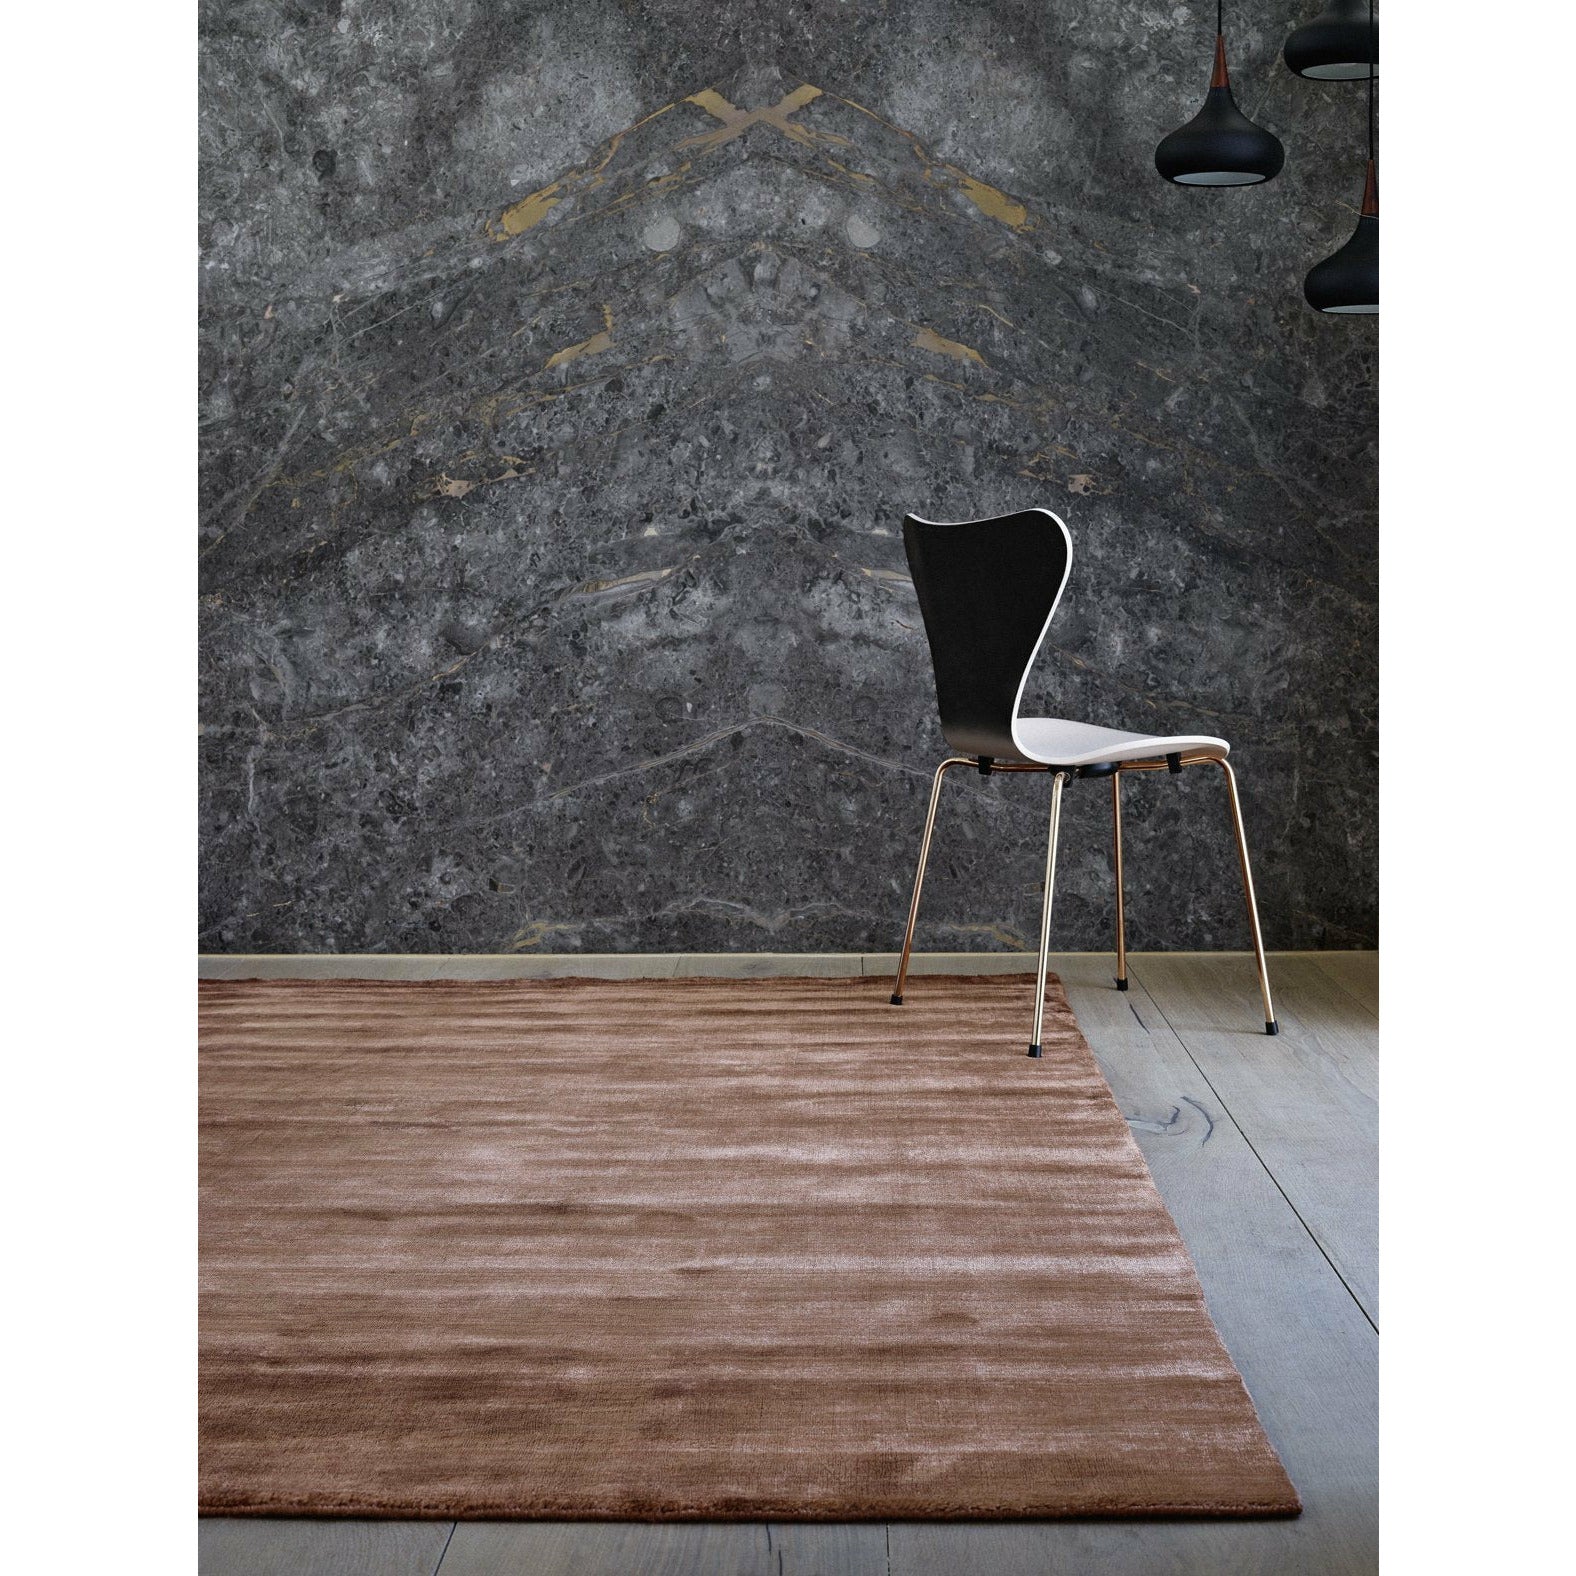 Massimo竹地毯铜，200x300厘米